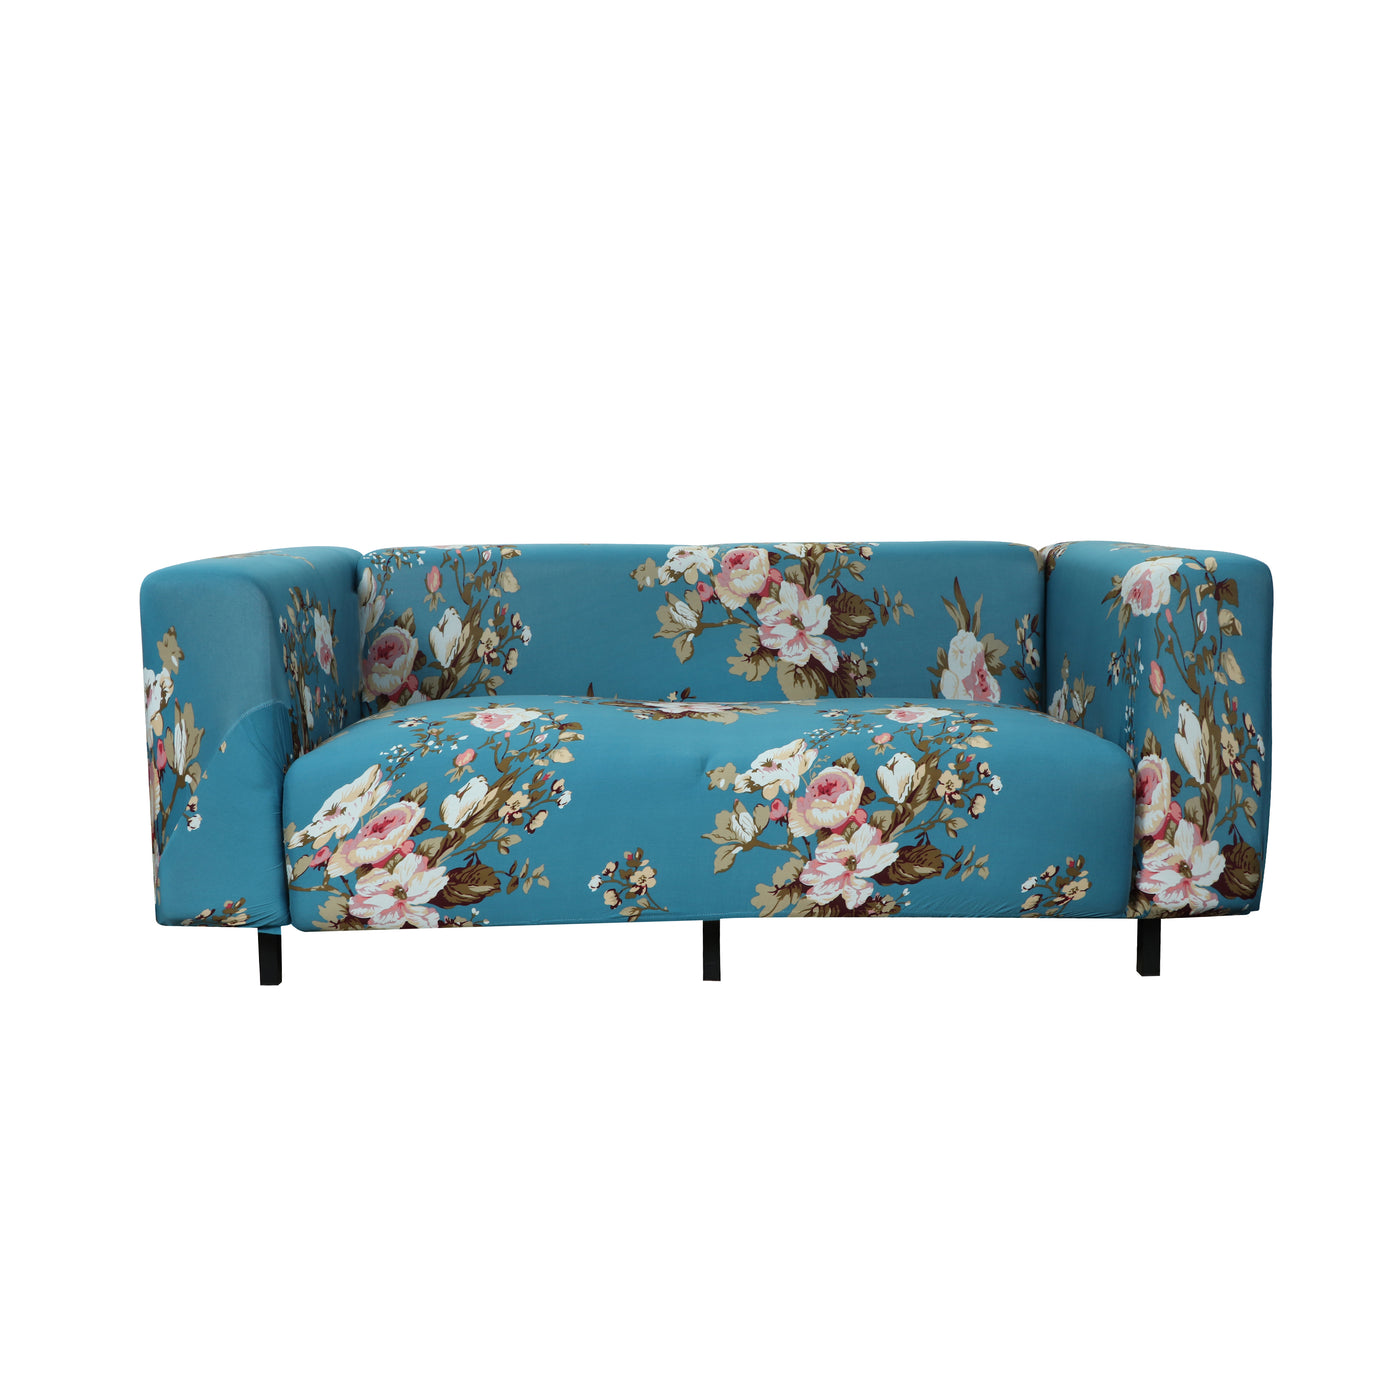 Printed Sofa Cover - Blue Flower